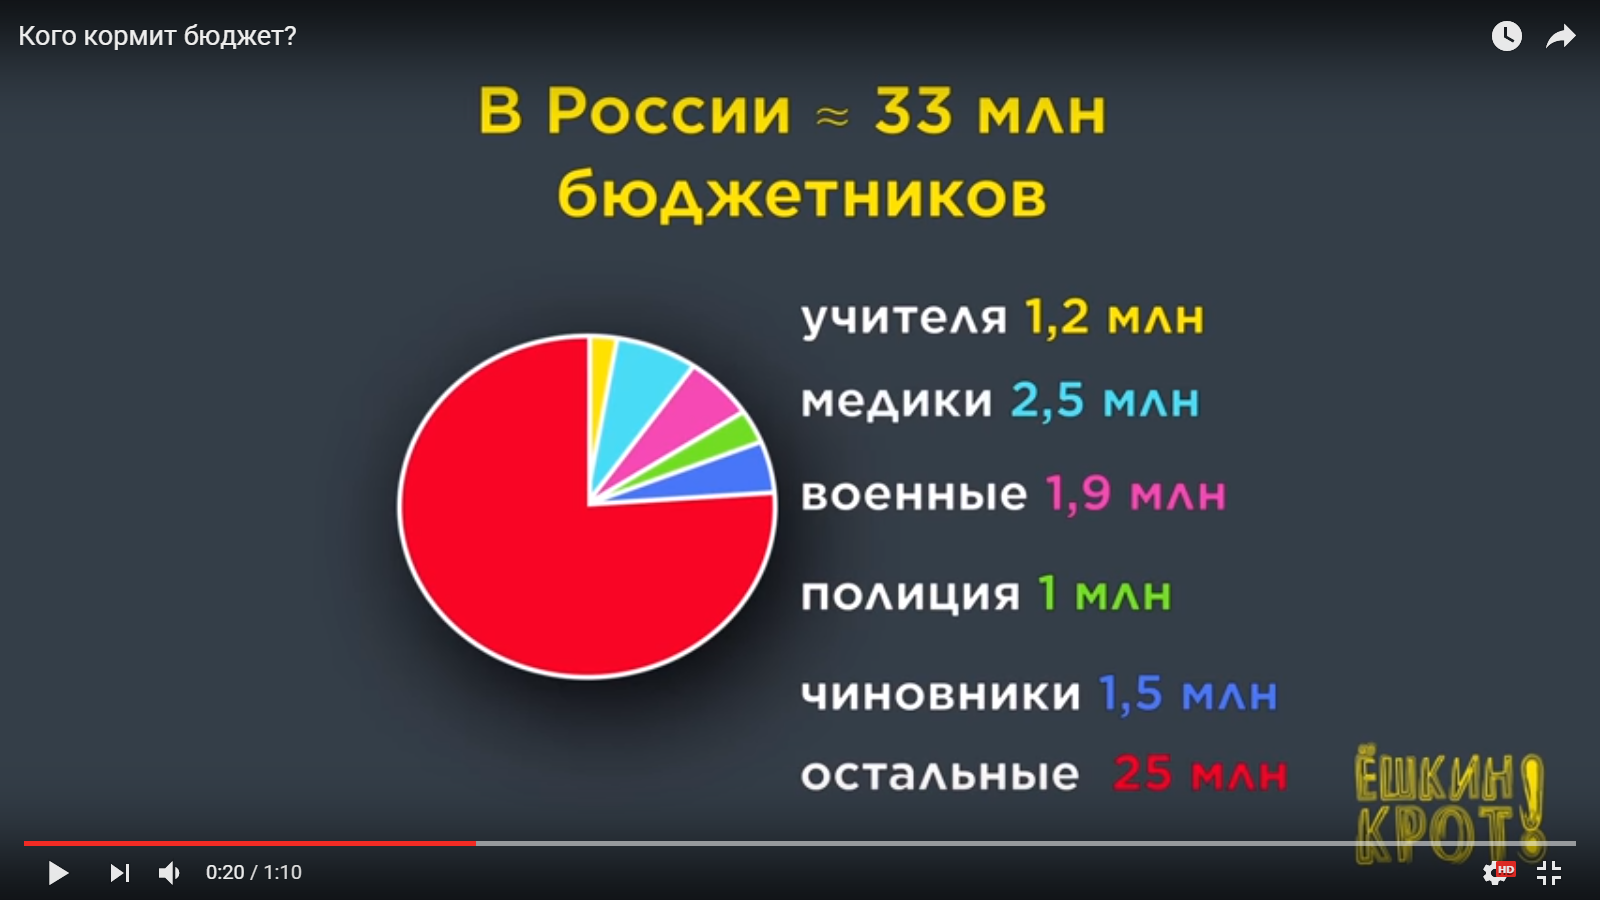 Количество бюджетников. Число бюджетников в России. Процент бюджетников в России. Сколько бюджетников в России.